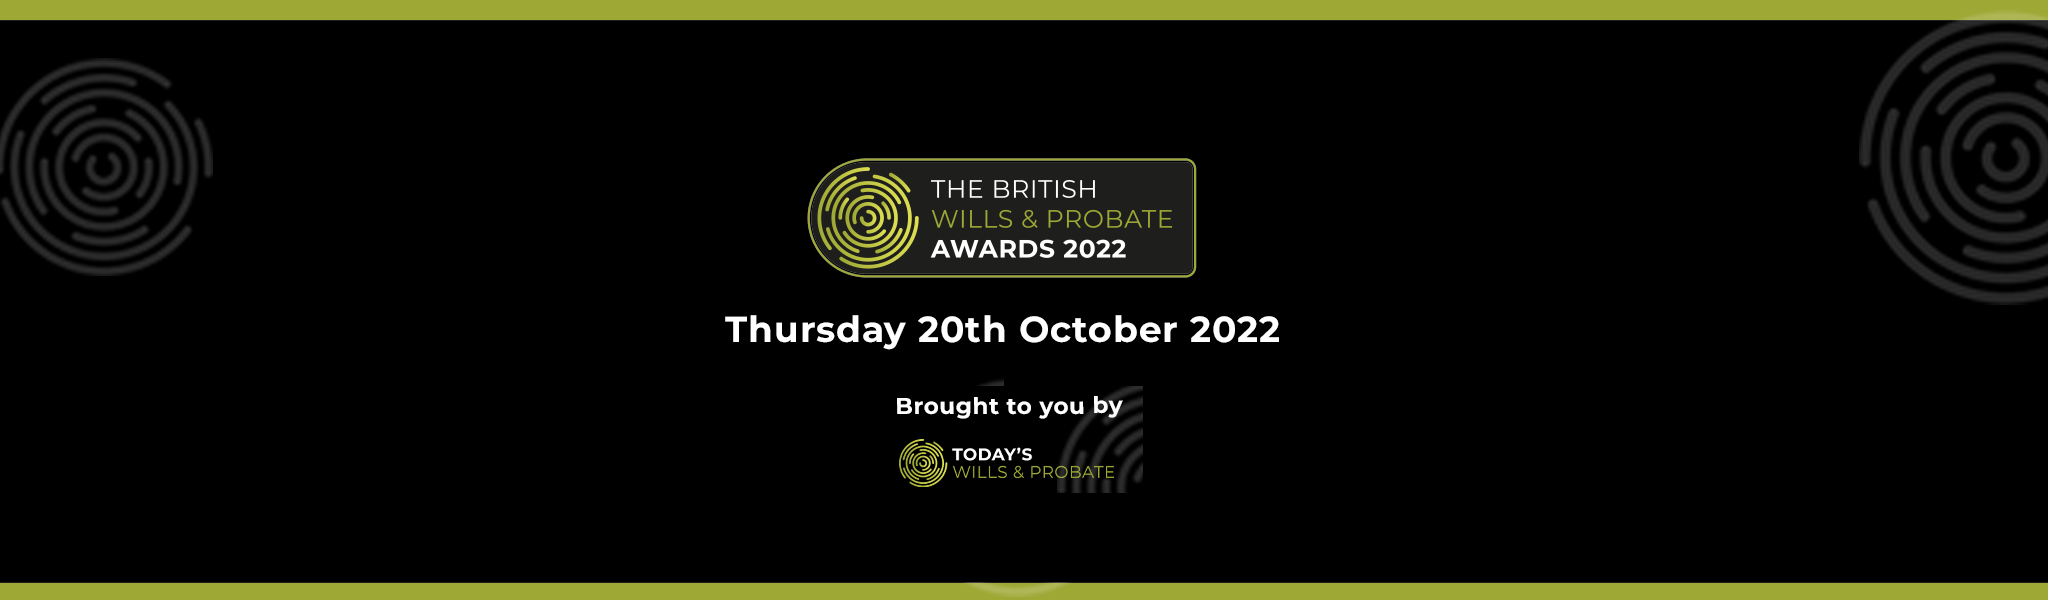 The British Wills and Probate Awards 2022